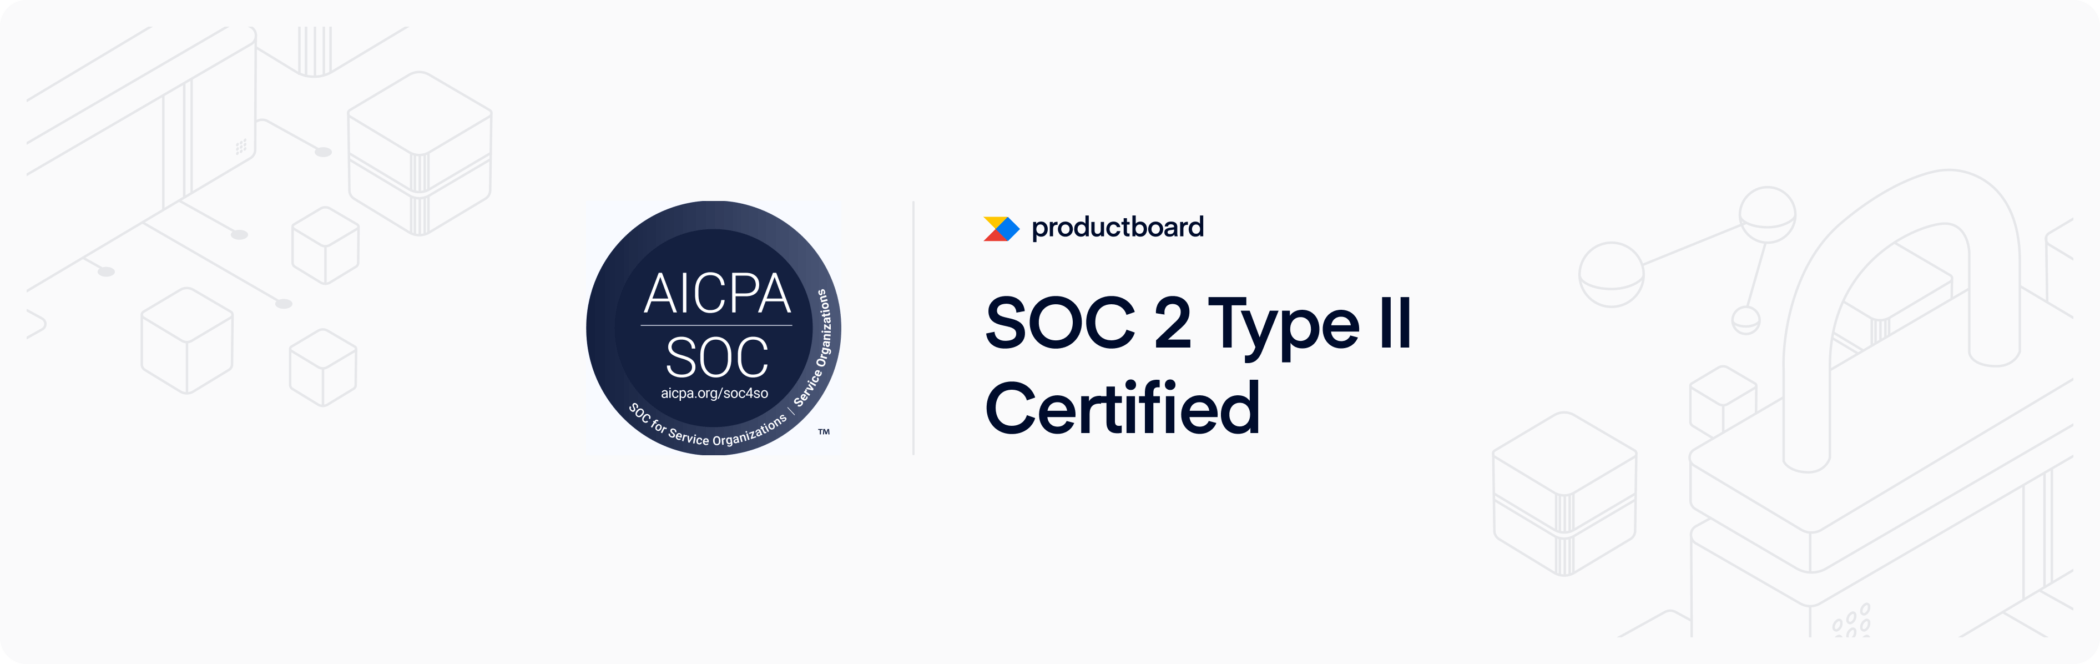 Productboard is now SOC 2 Type II certified